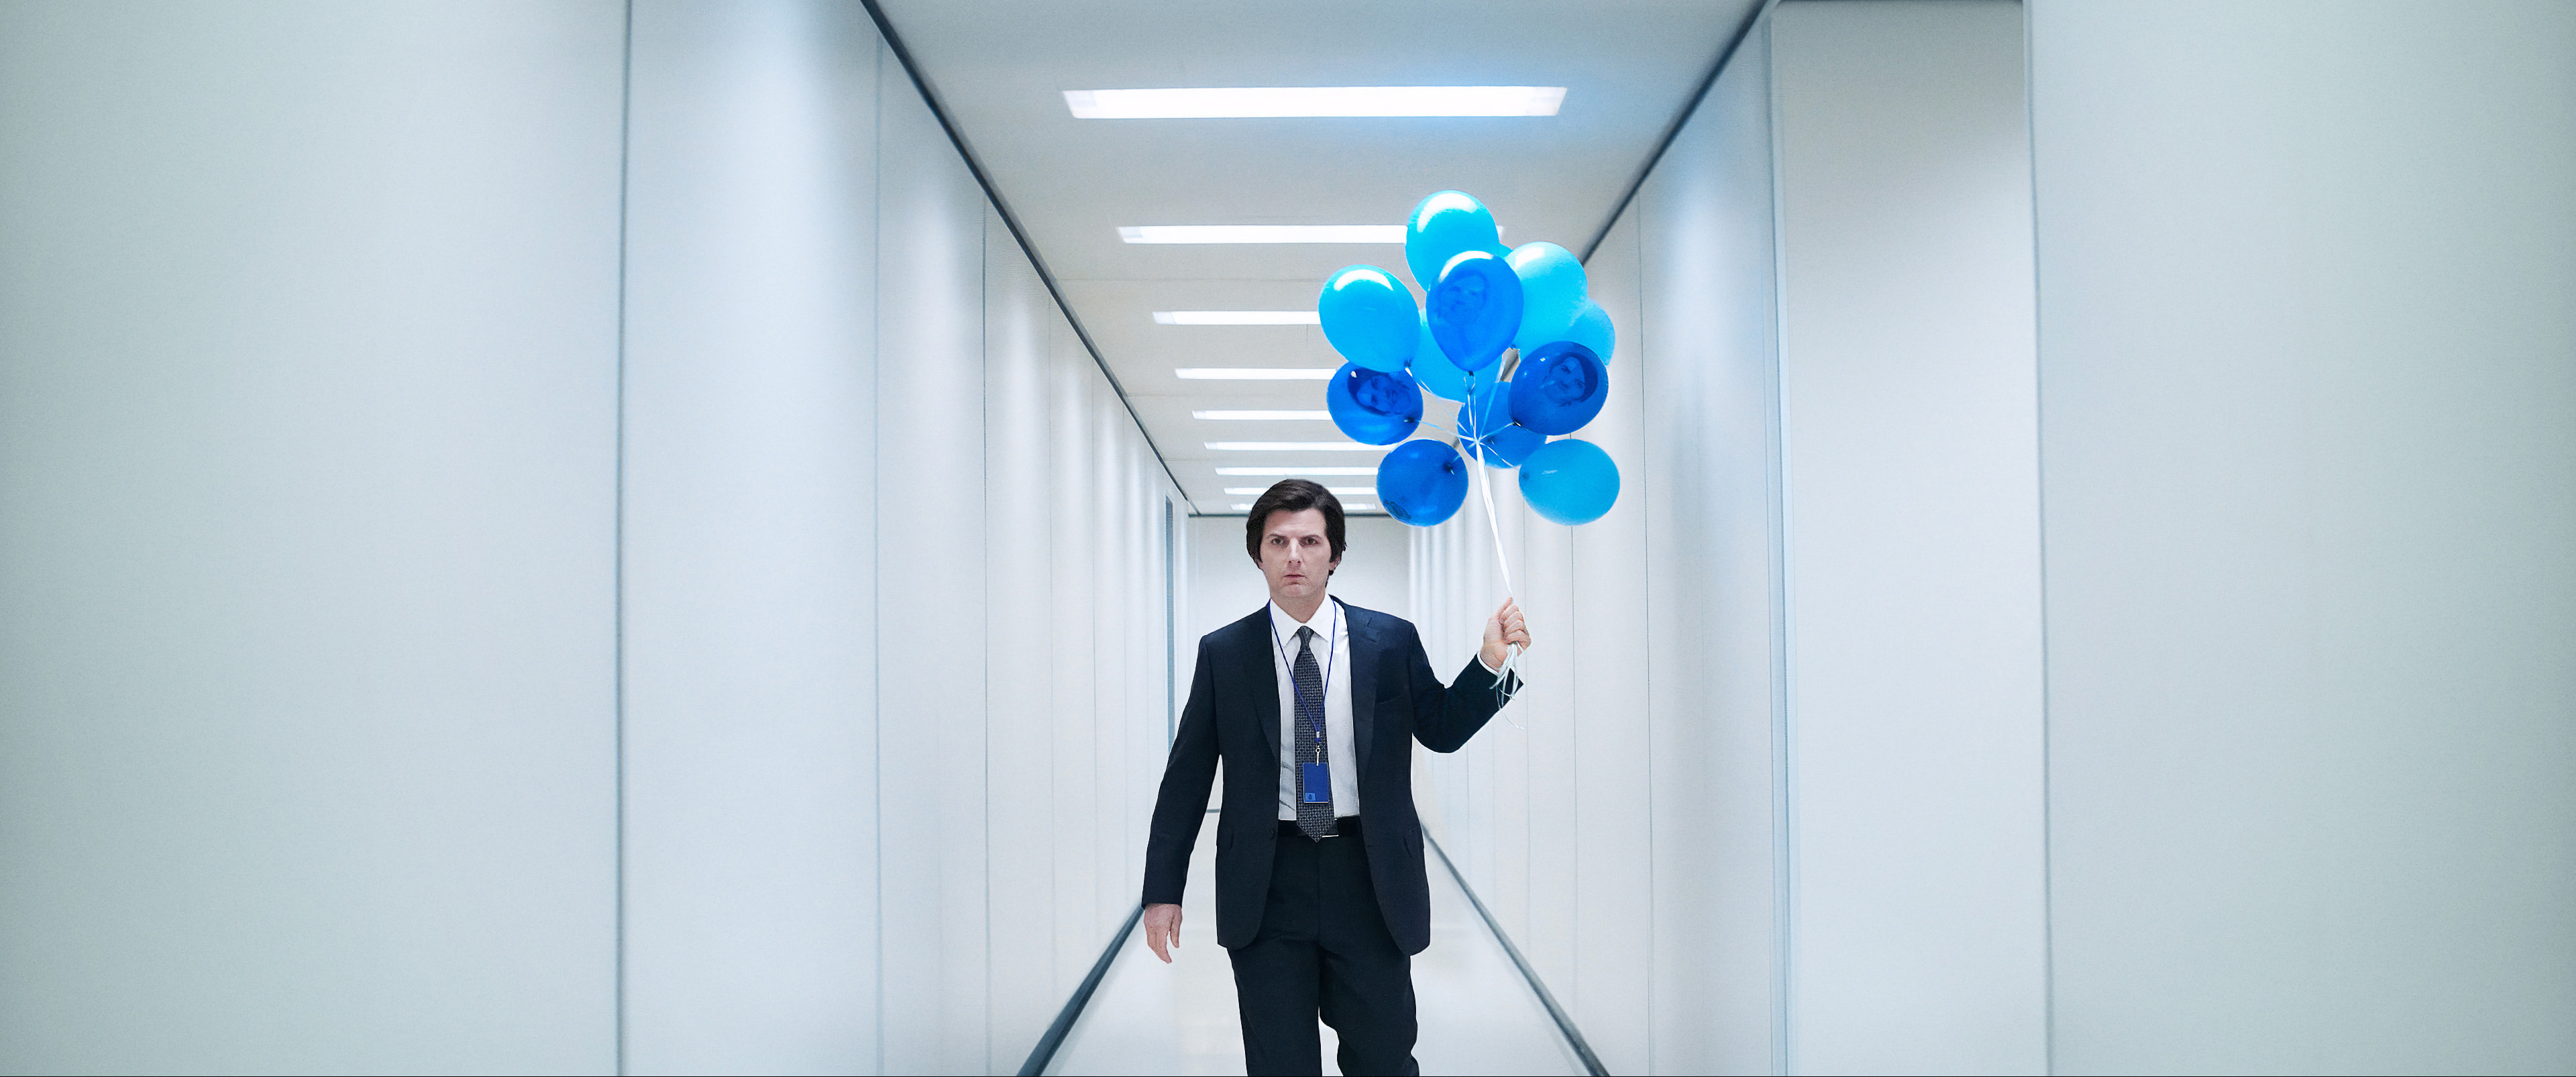 Mark (Adam Scott) standing in a hallway of Lumon Industries with balloons